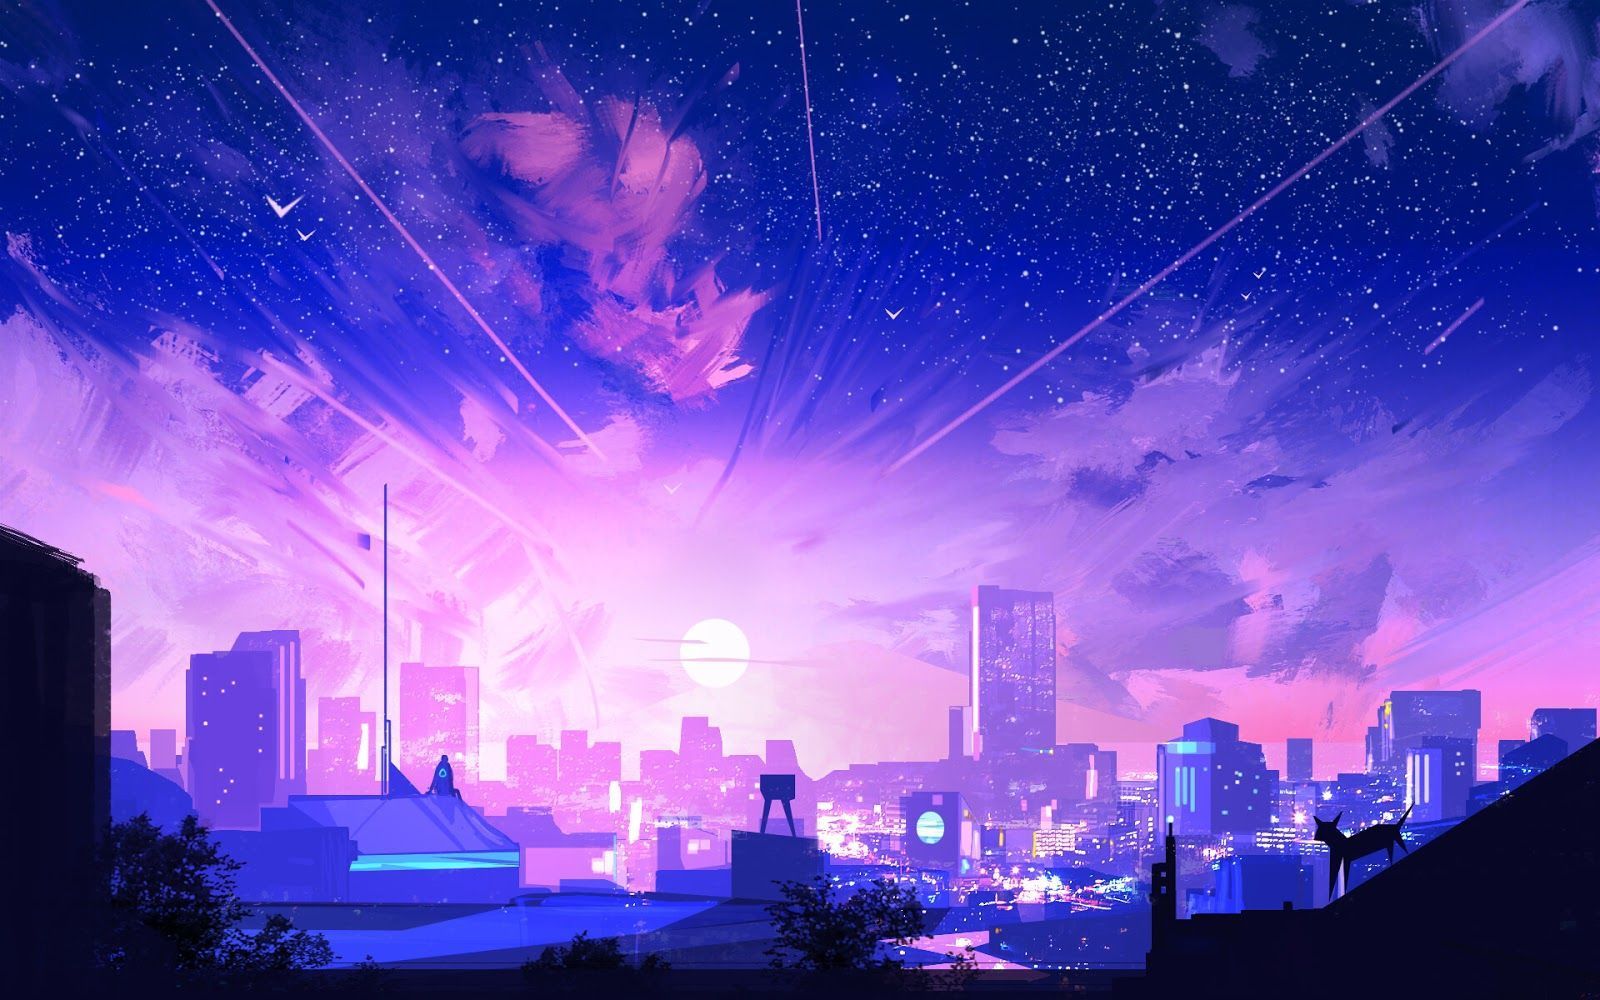 Anime city wallpaper 2019 for mobile phone - Night